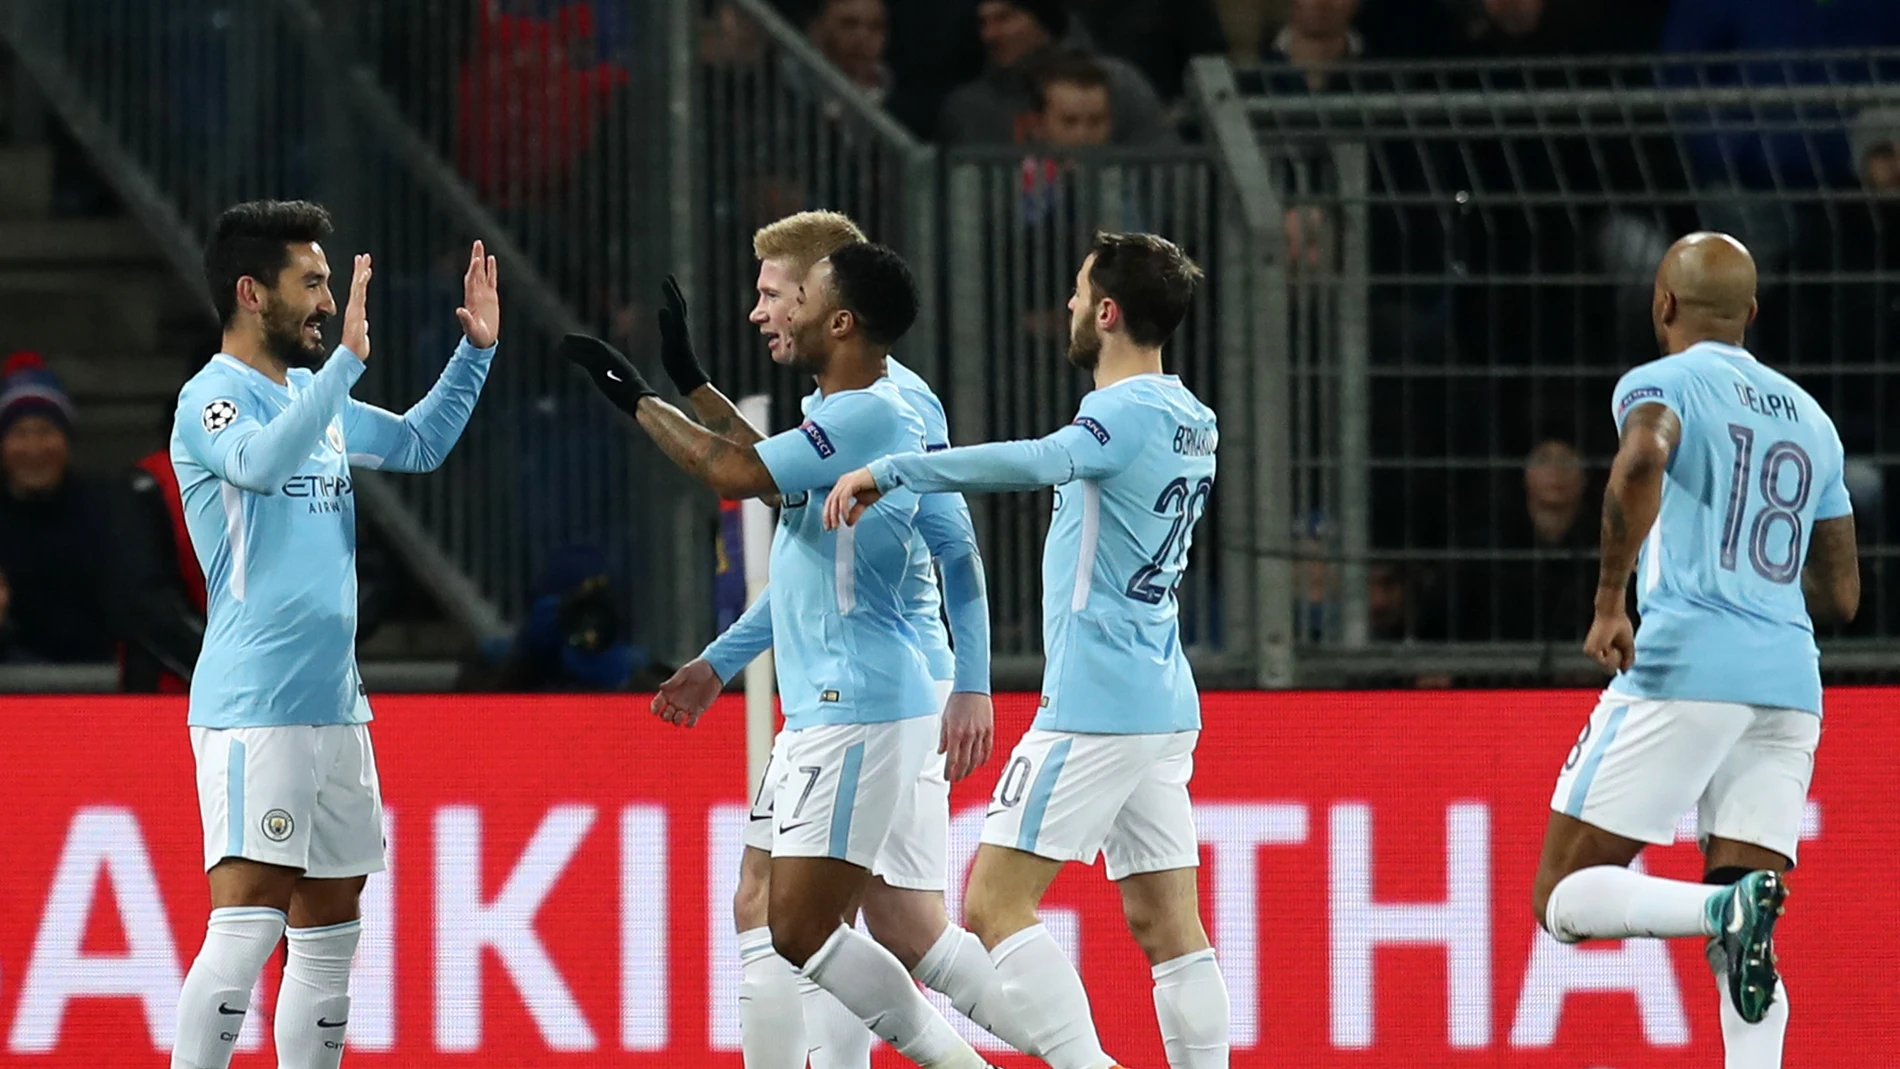 Gündogan celebra un gol ante el Basilea